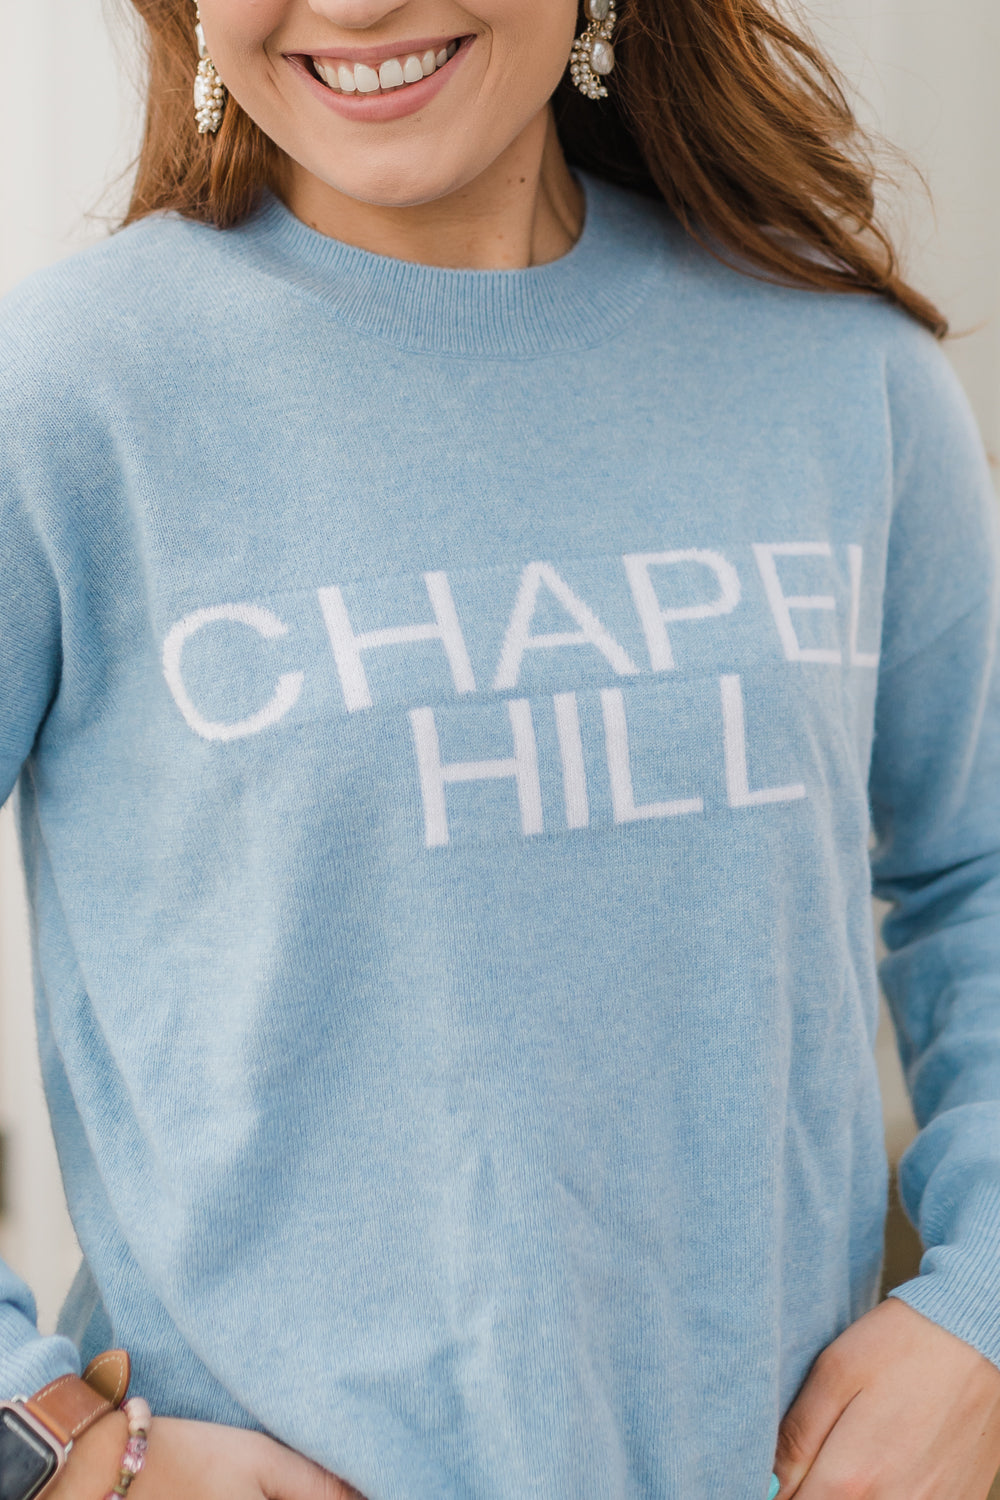 Chapel Hill, North Carolina Cashmere Sweater